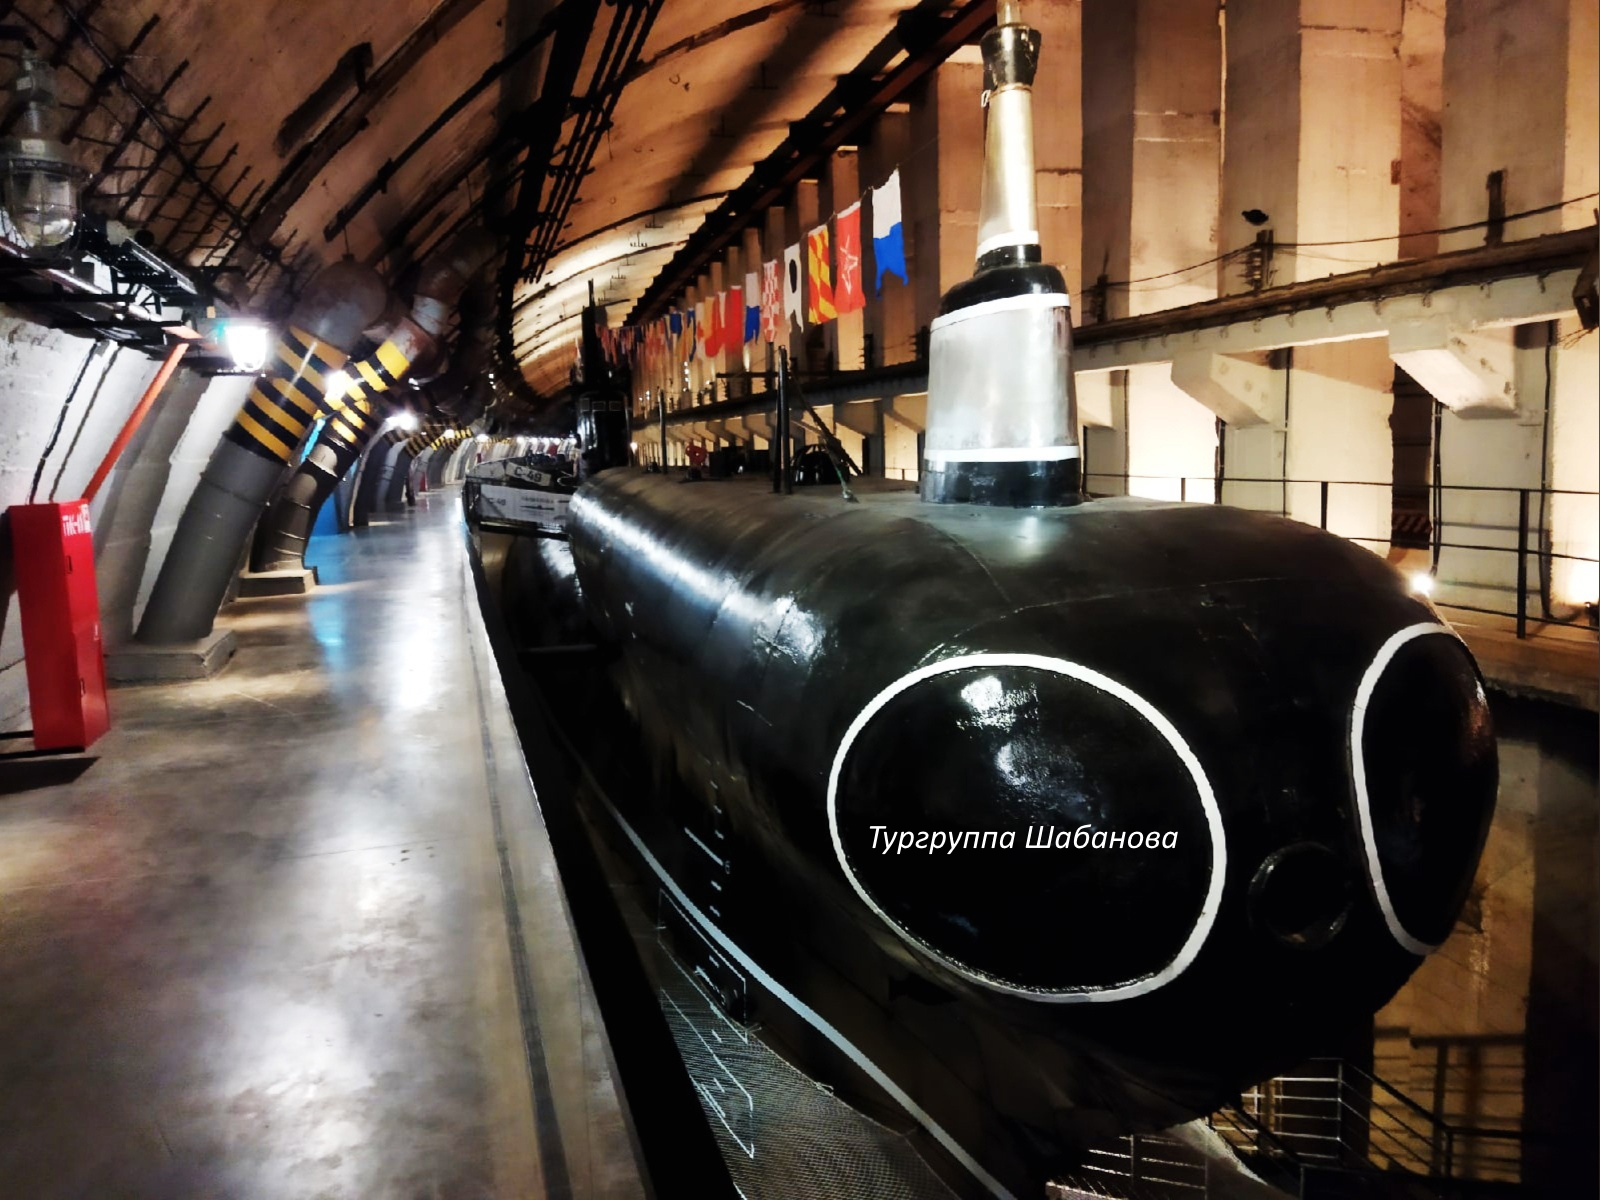 Музей пл. Балаклава музей подводных лодок. Балаклава подземный музейный комплекс. Музей подводных лодок Севастополь. Балаклава объект 825 ГТС музей.